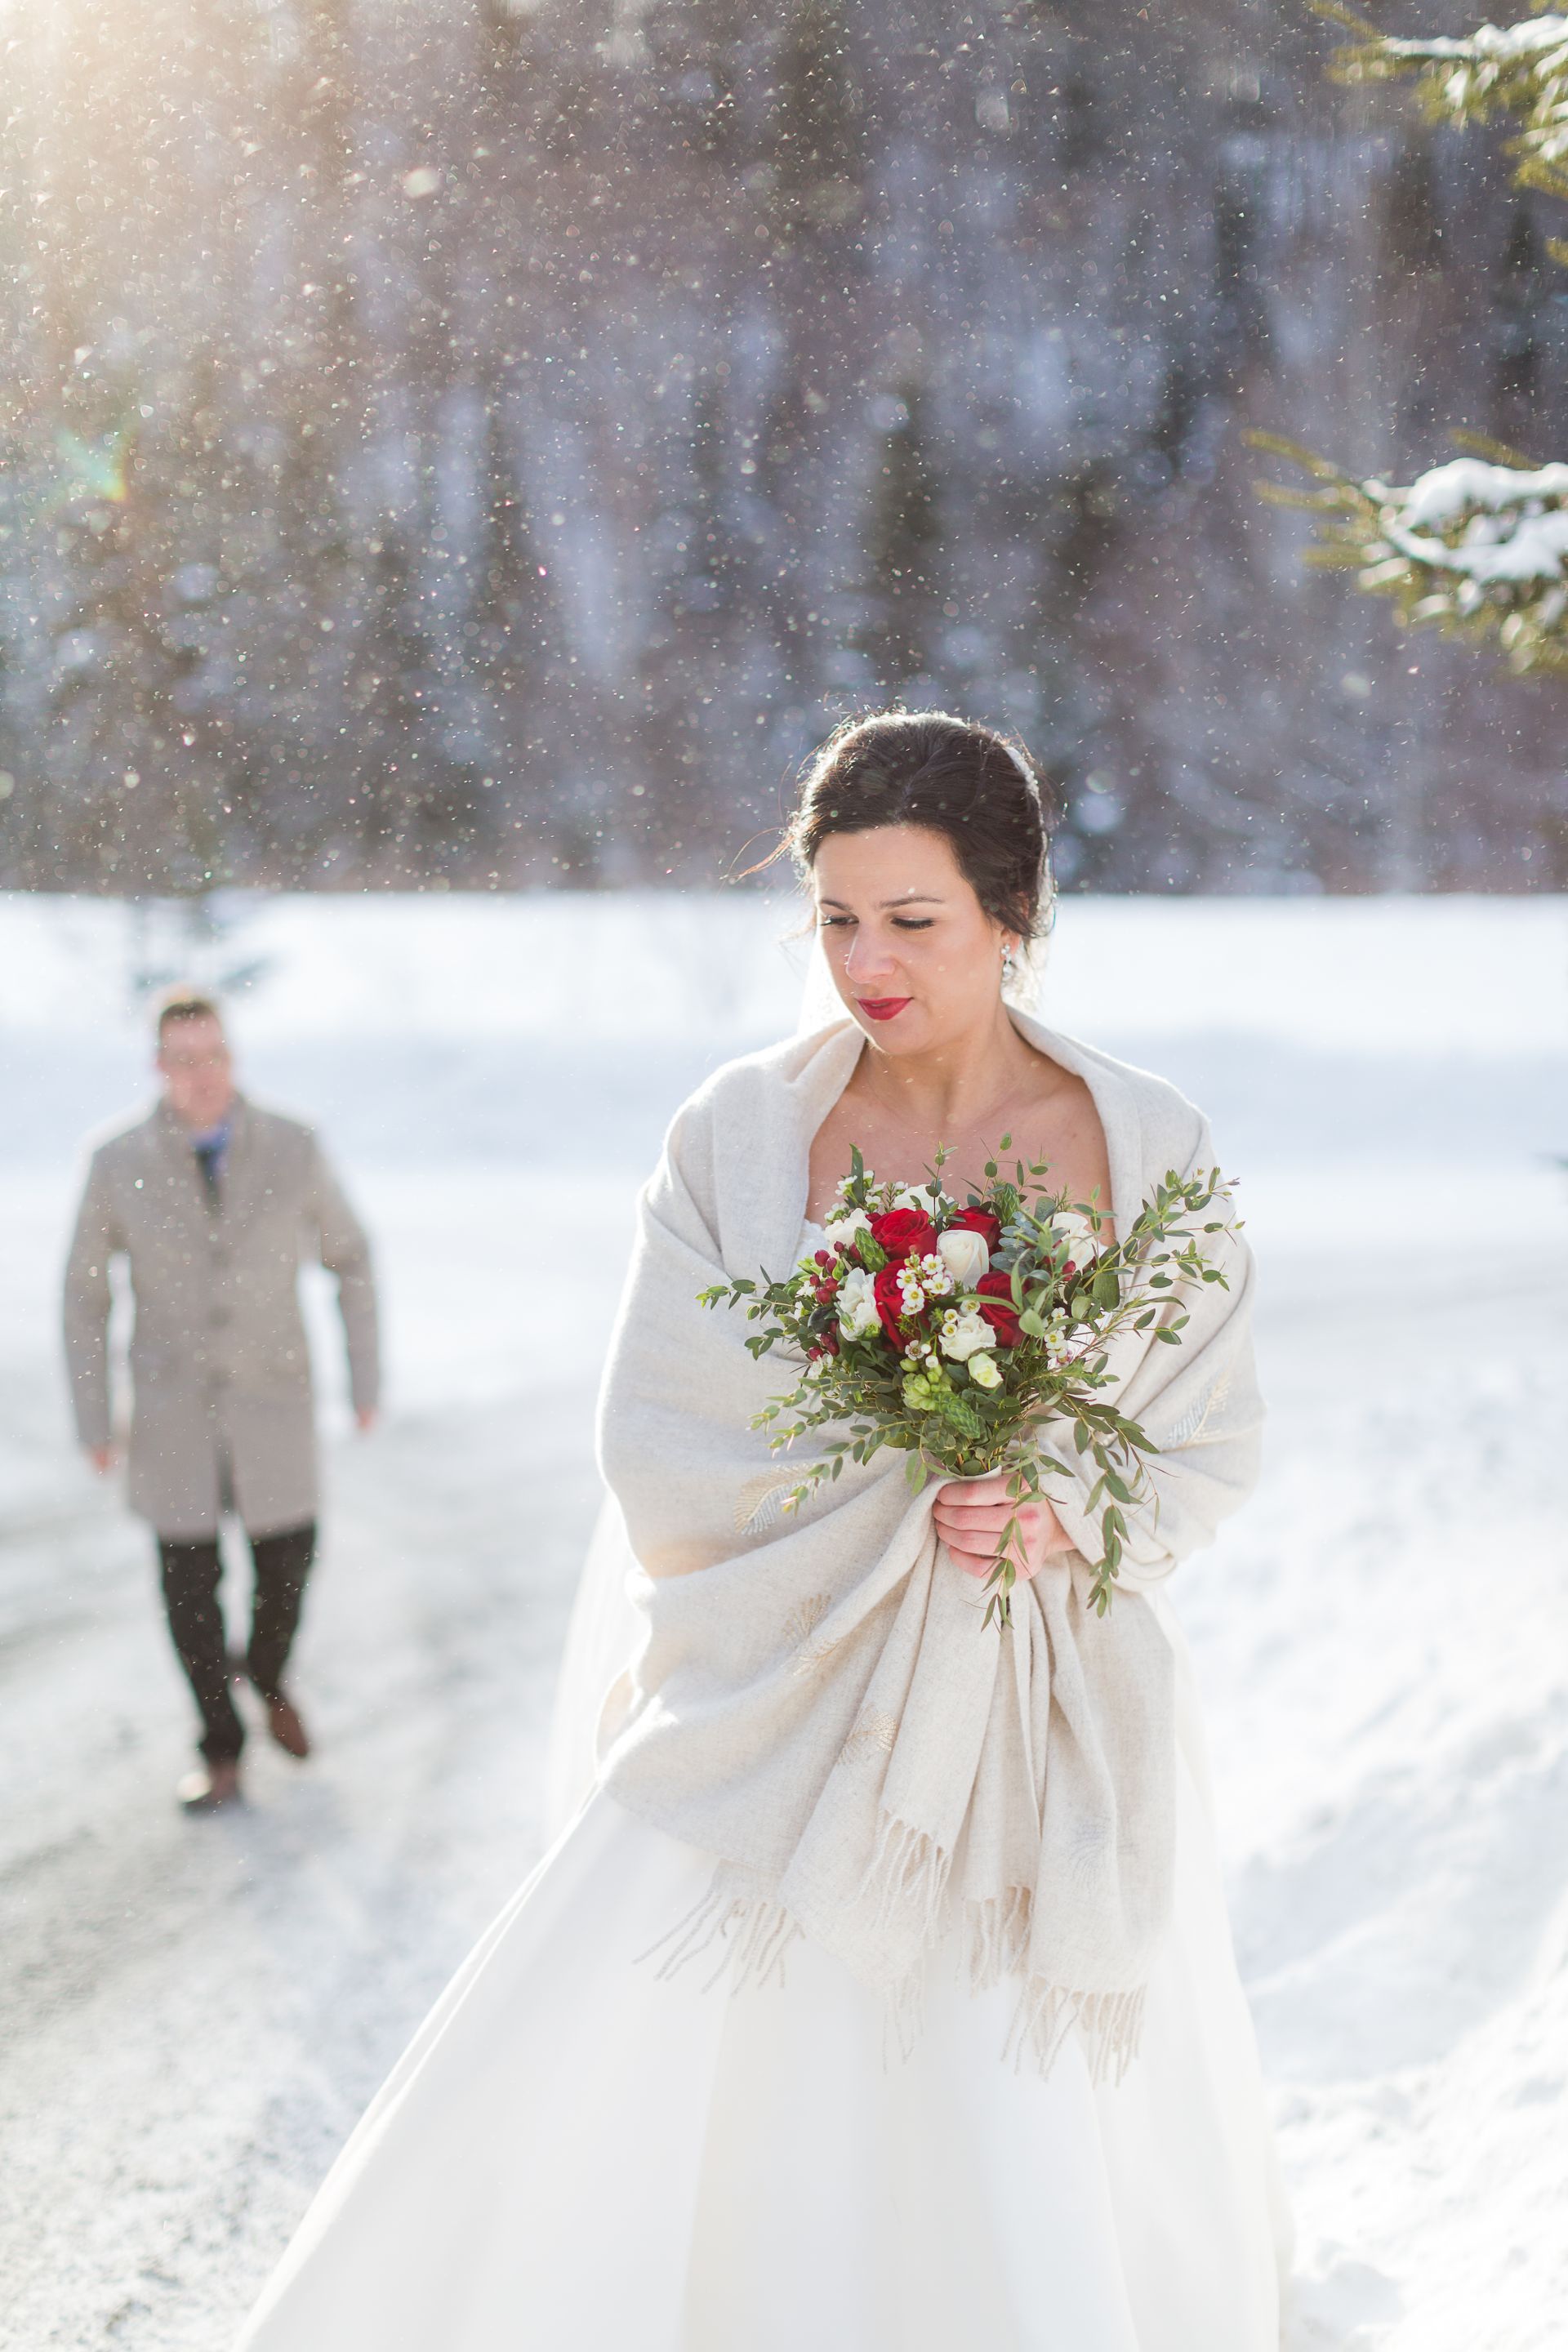 Mariage hivernal - Lac-Beauport, Québec